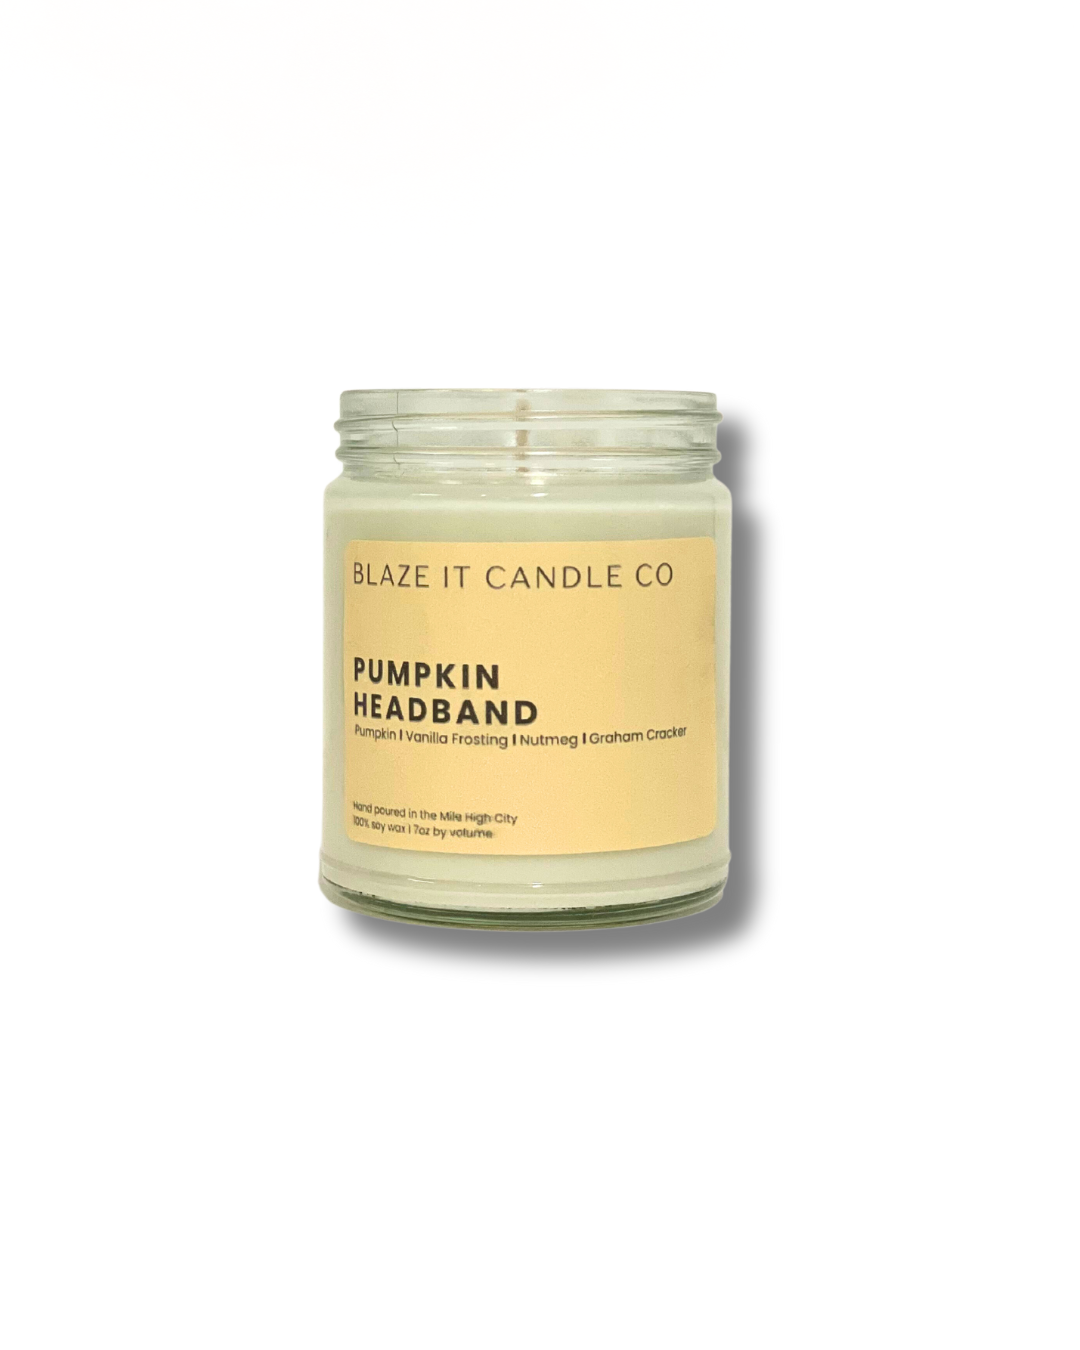 Pumpkin Headband soy candle - Blaze It Candle Co